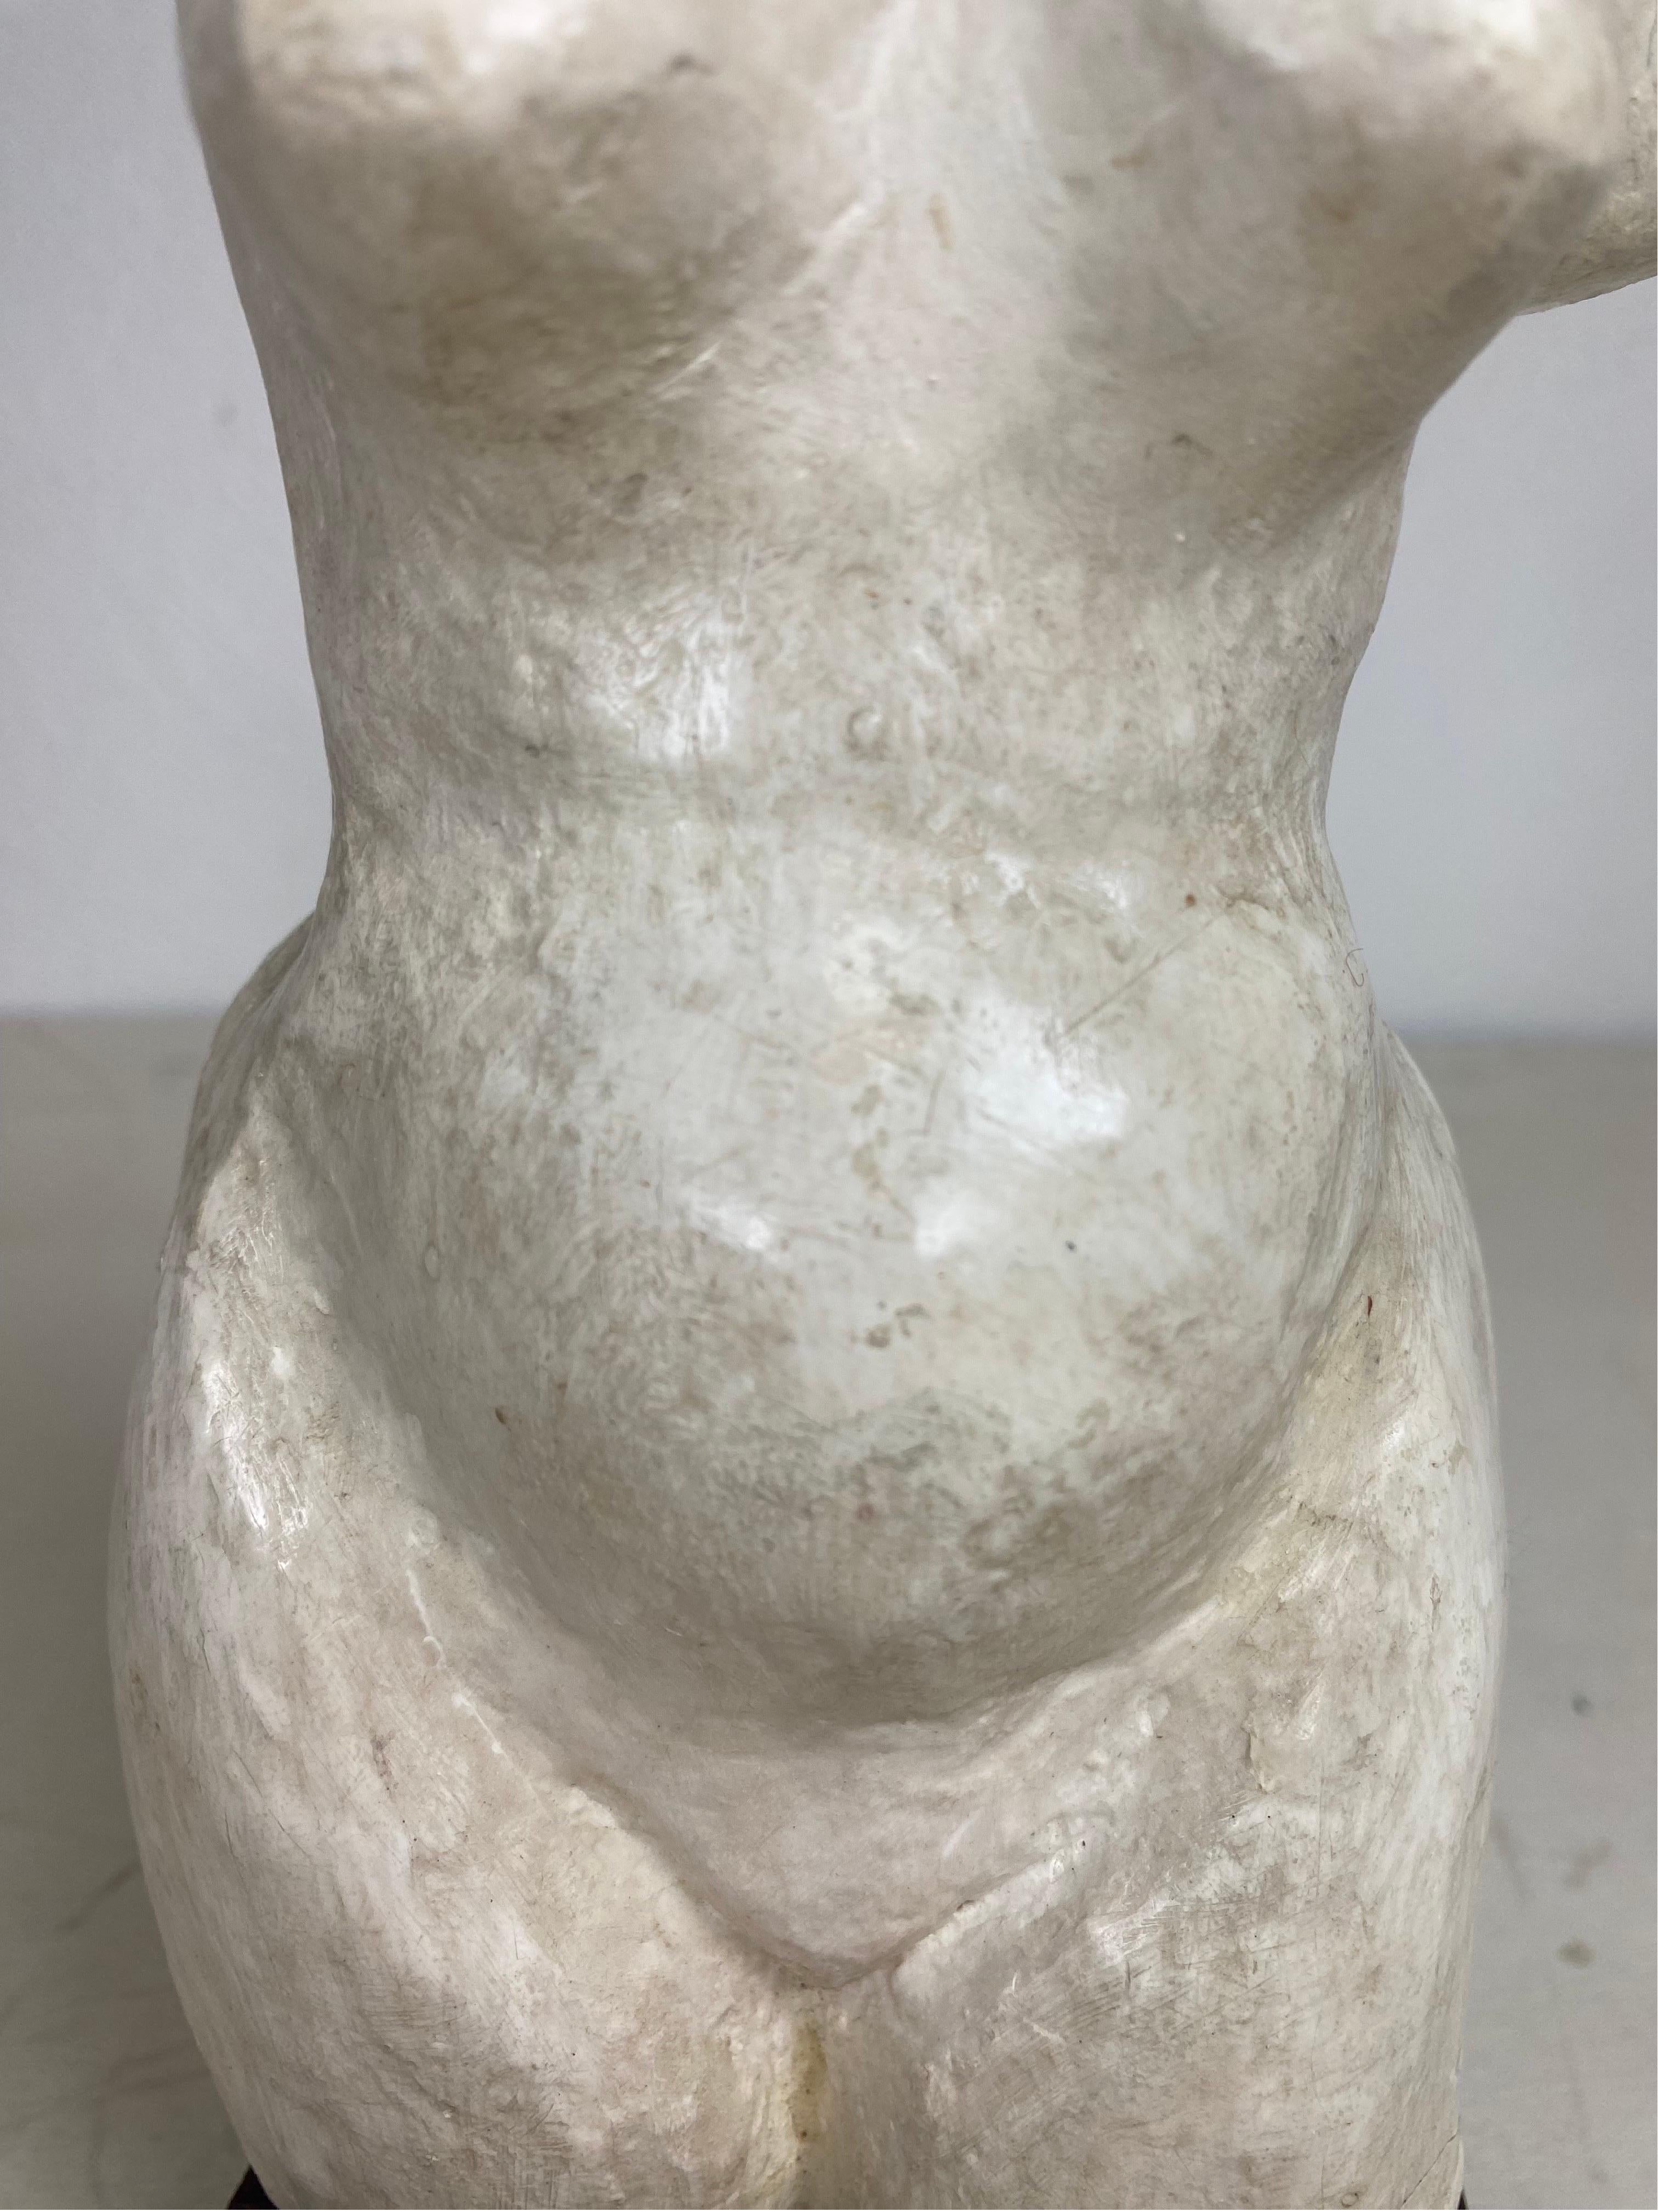 Plaster Mid-20th century female nude study plaster sculpture